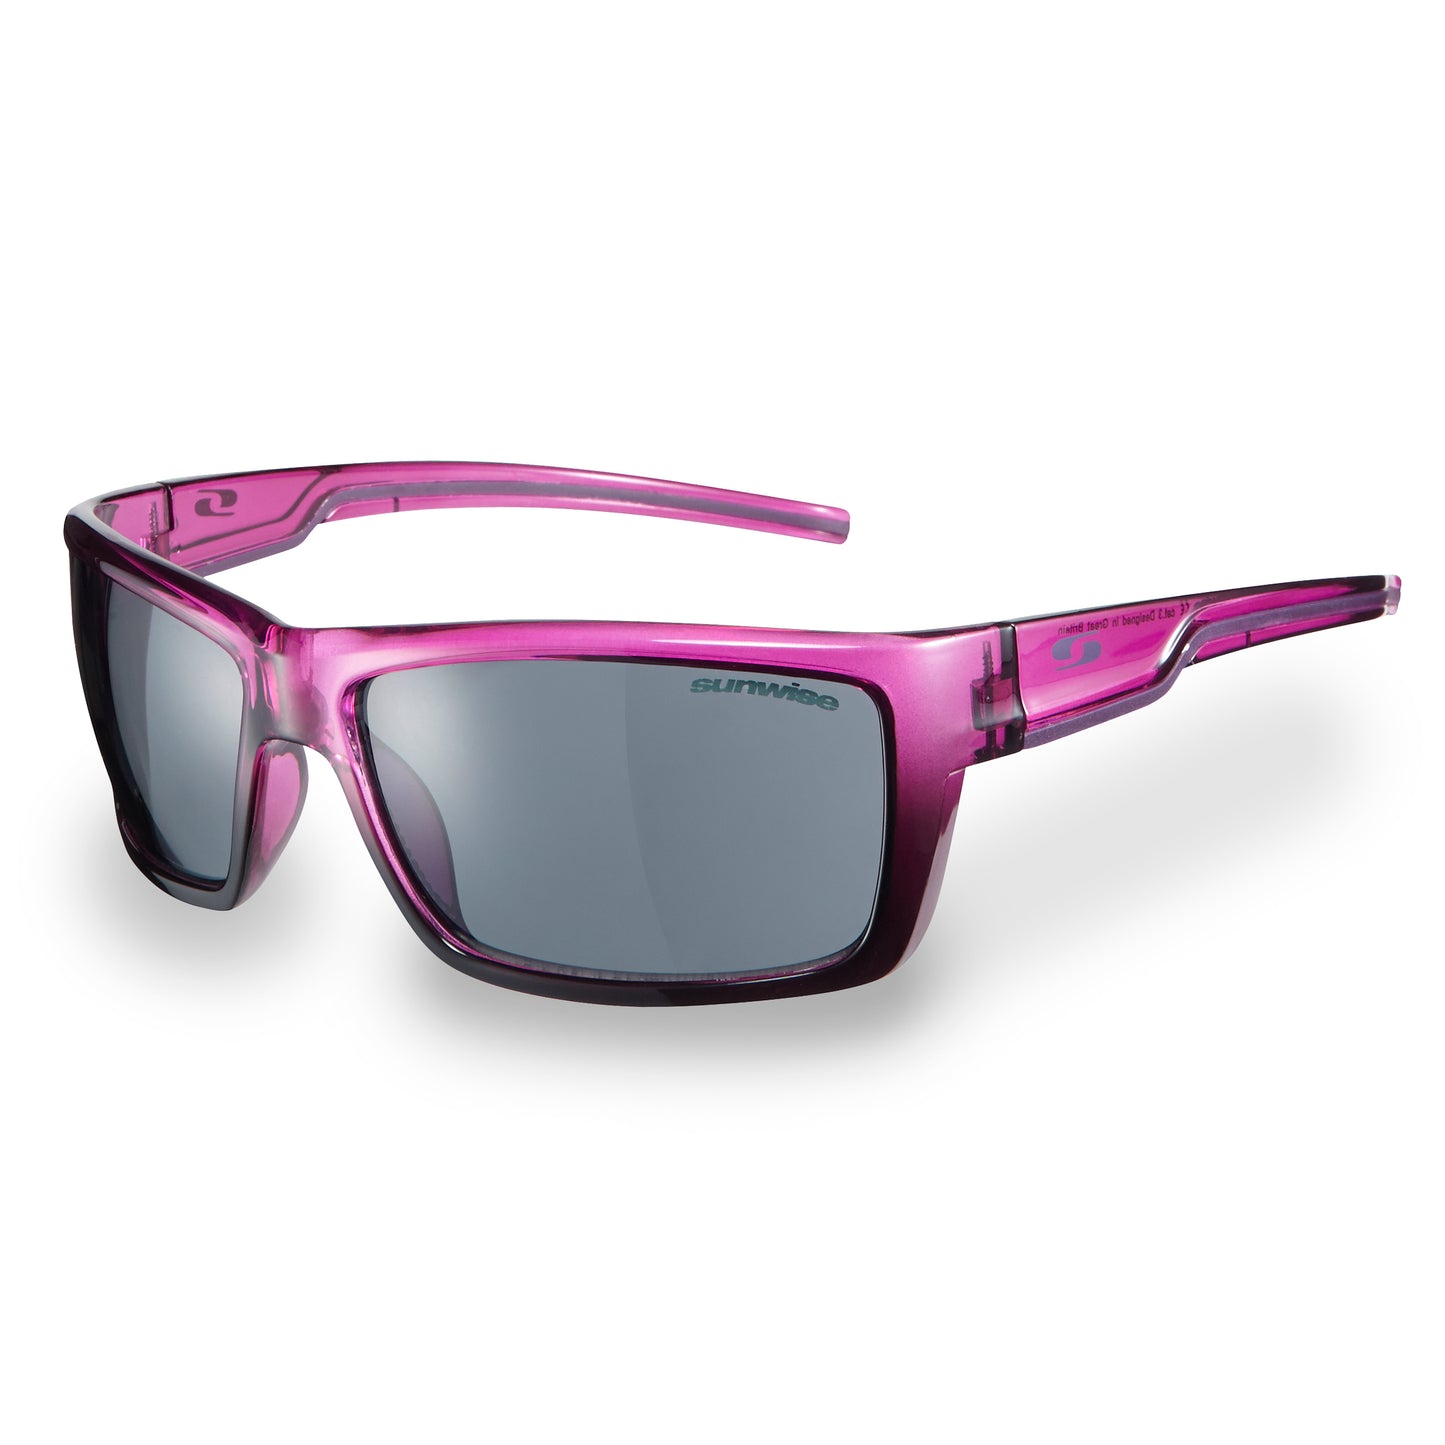 Sunwise Pioneer Pink sports sunglasses